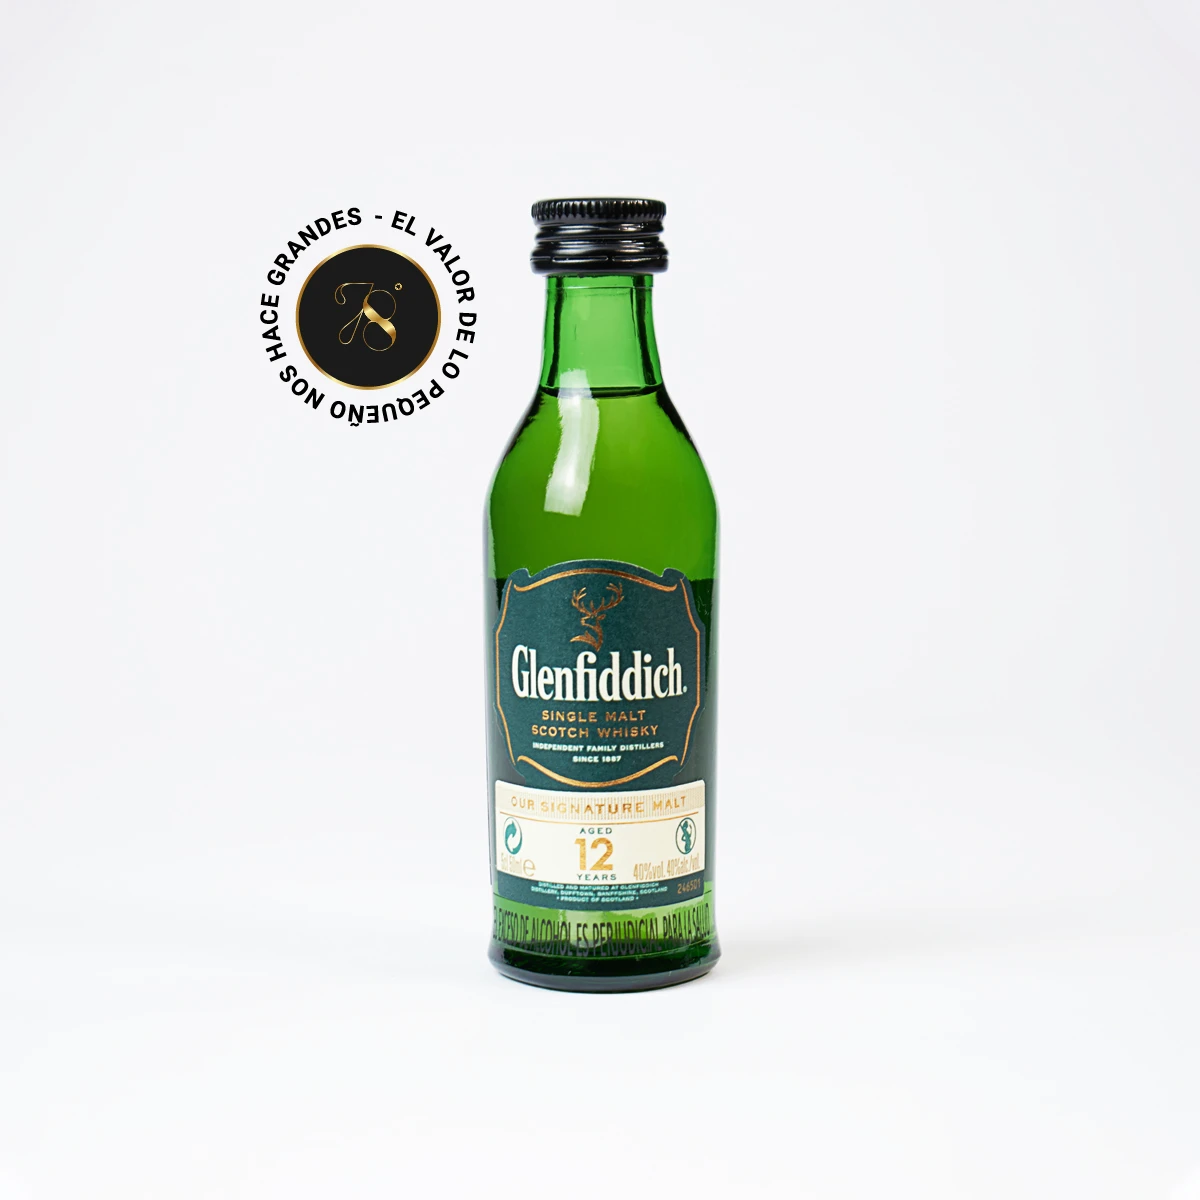 MB11 - Mini Botella - Botellita de licor de Whisky Glenfiddich 12 años más caja de regalo premium e invitación o fotografía personalizada. Ideal para eventos, recuerdos, bodas o regalos corporativos.